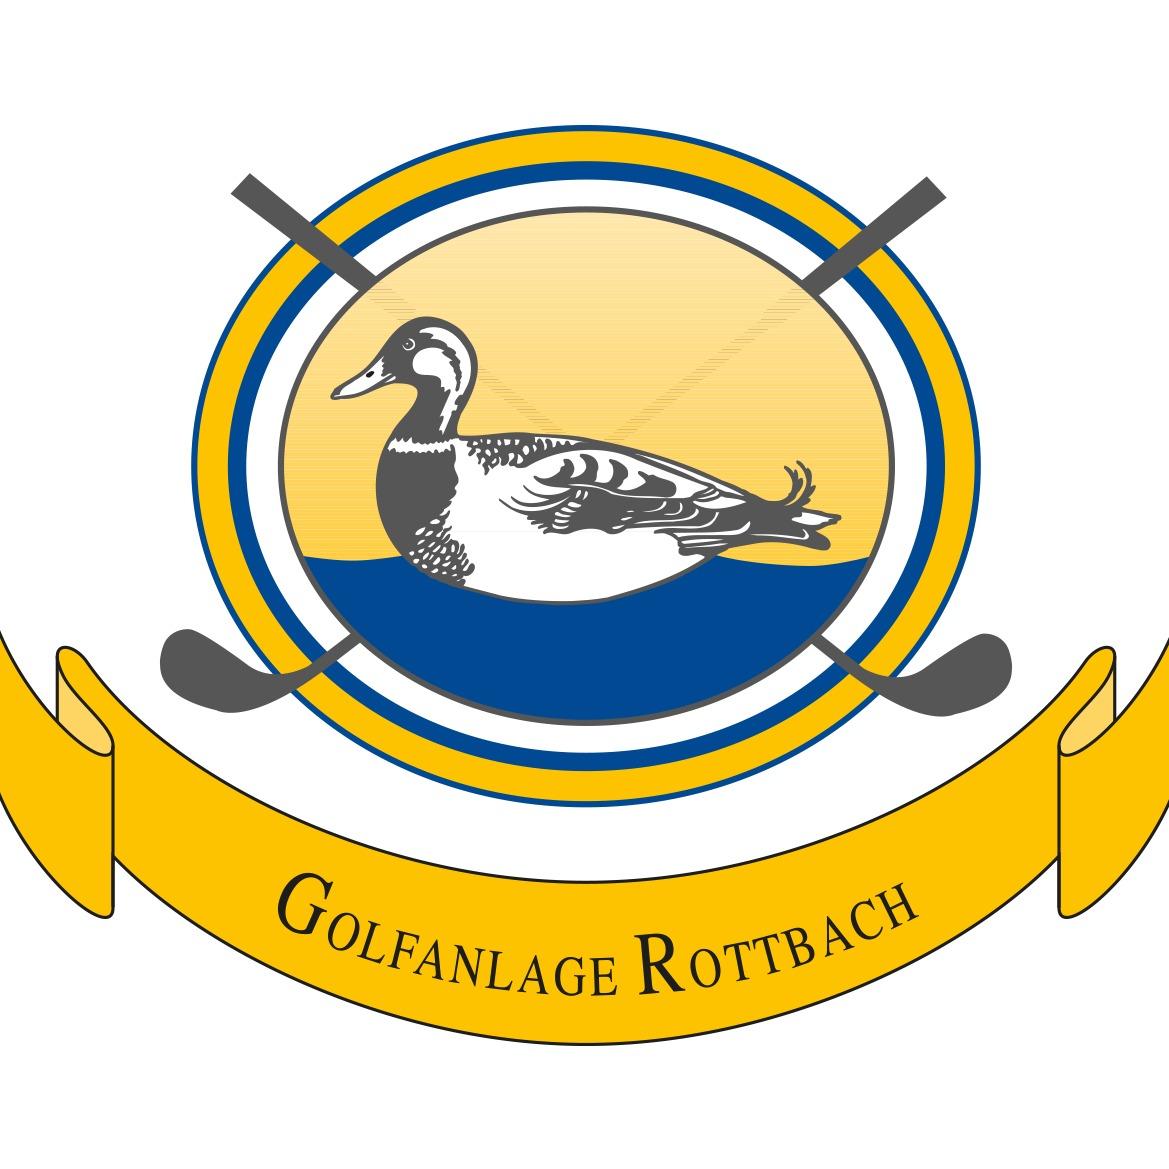 Golfanlage Rottbach Logo